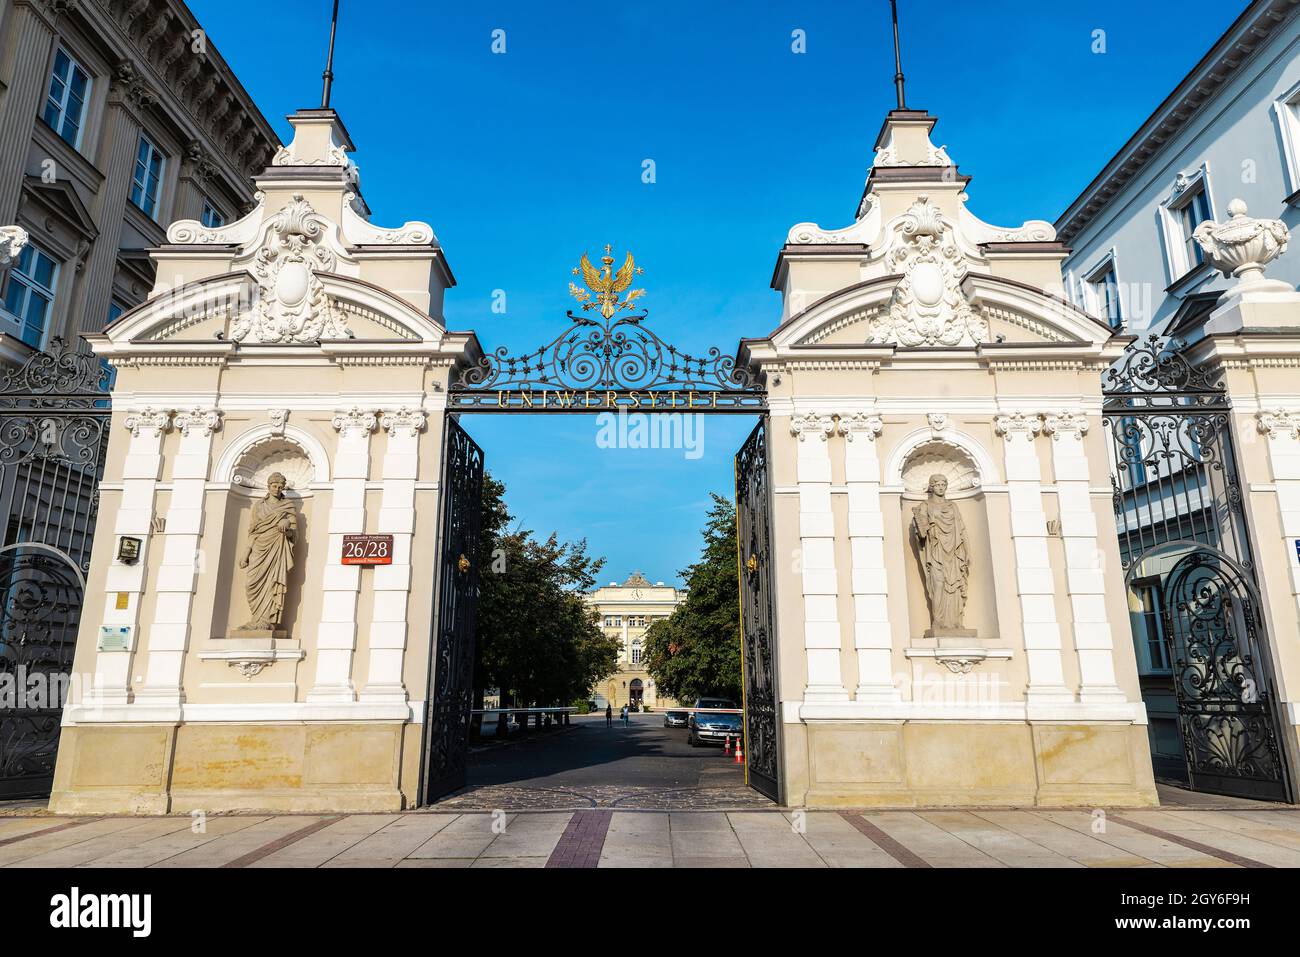 Warsaw, Poland - September 1, 2018: Entrance of the Warsaw University or Uniwersytet Warszawski in Krakowskie Przedmiescie in the old town of Warsaw, Stock Photo